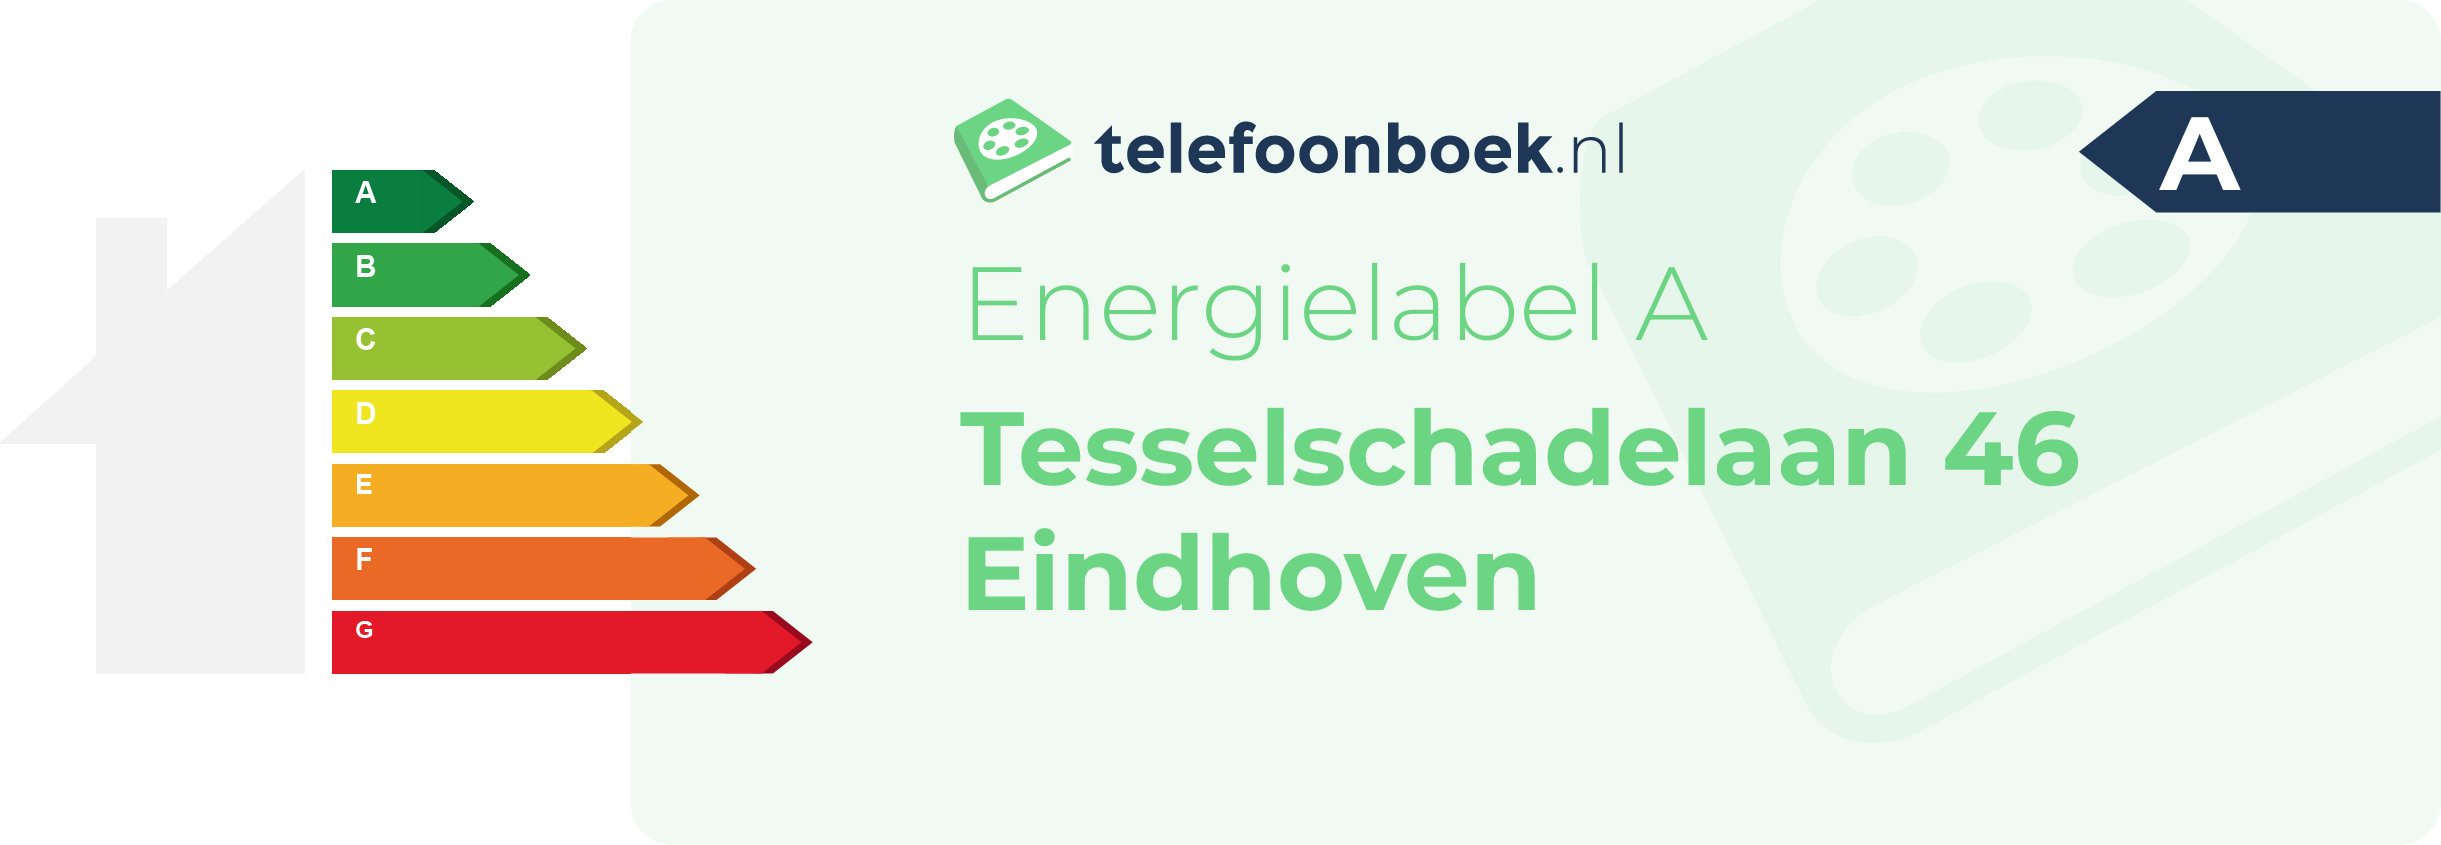 Energielabel Tesselschadelaan 46 Eindhoven